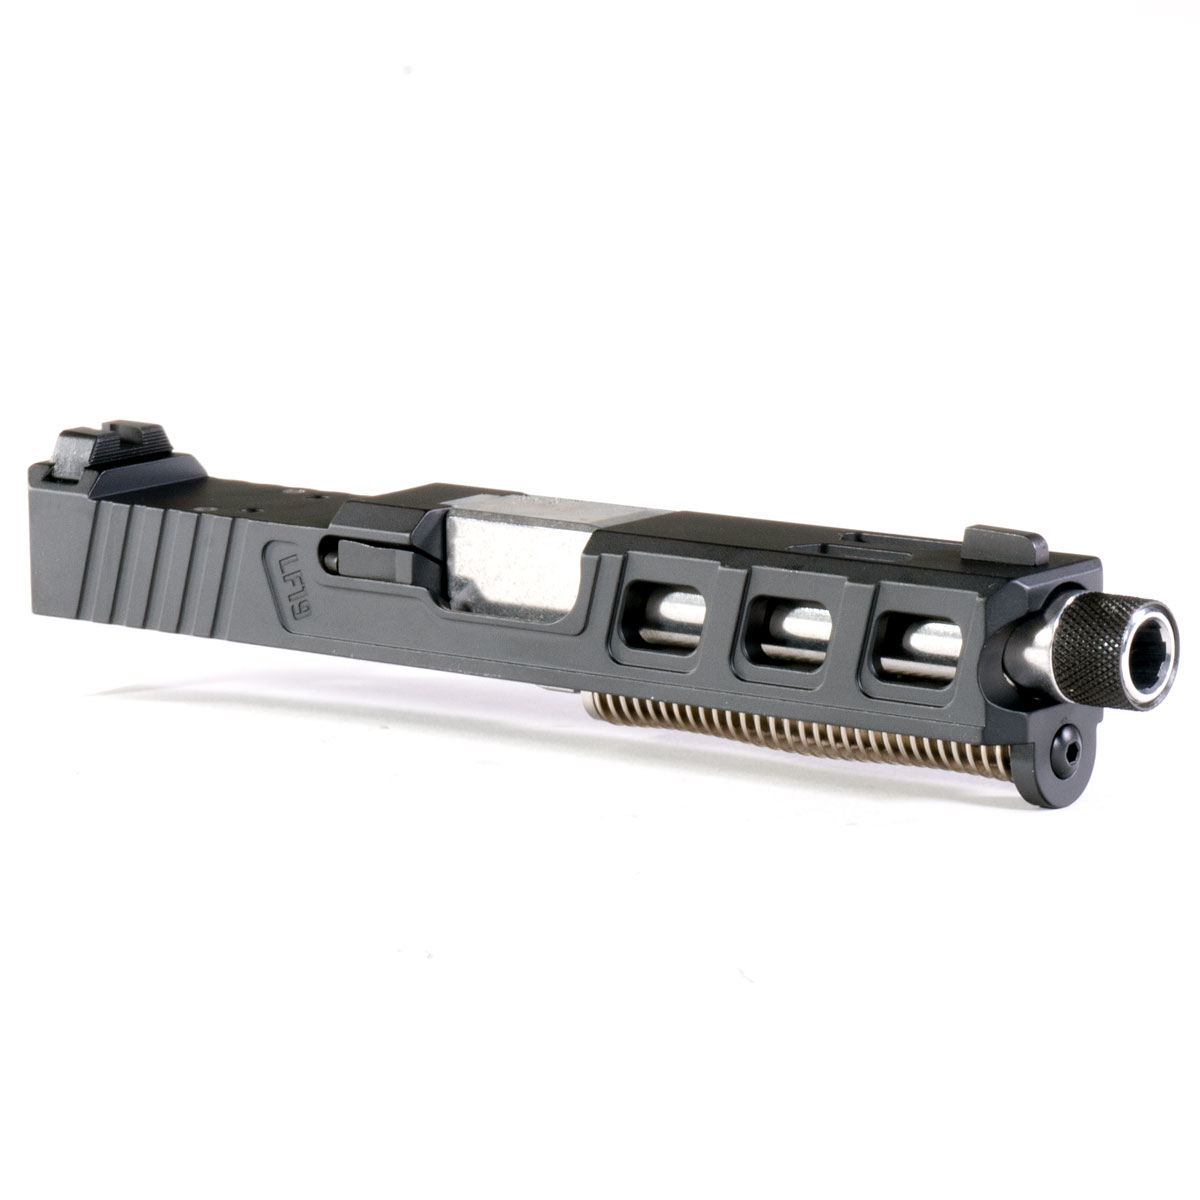 DD 'Pulse Phoenix' 9mm Complete Slide Kit - Glock 19 Gen 1-3 Compatible